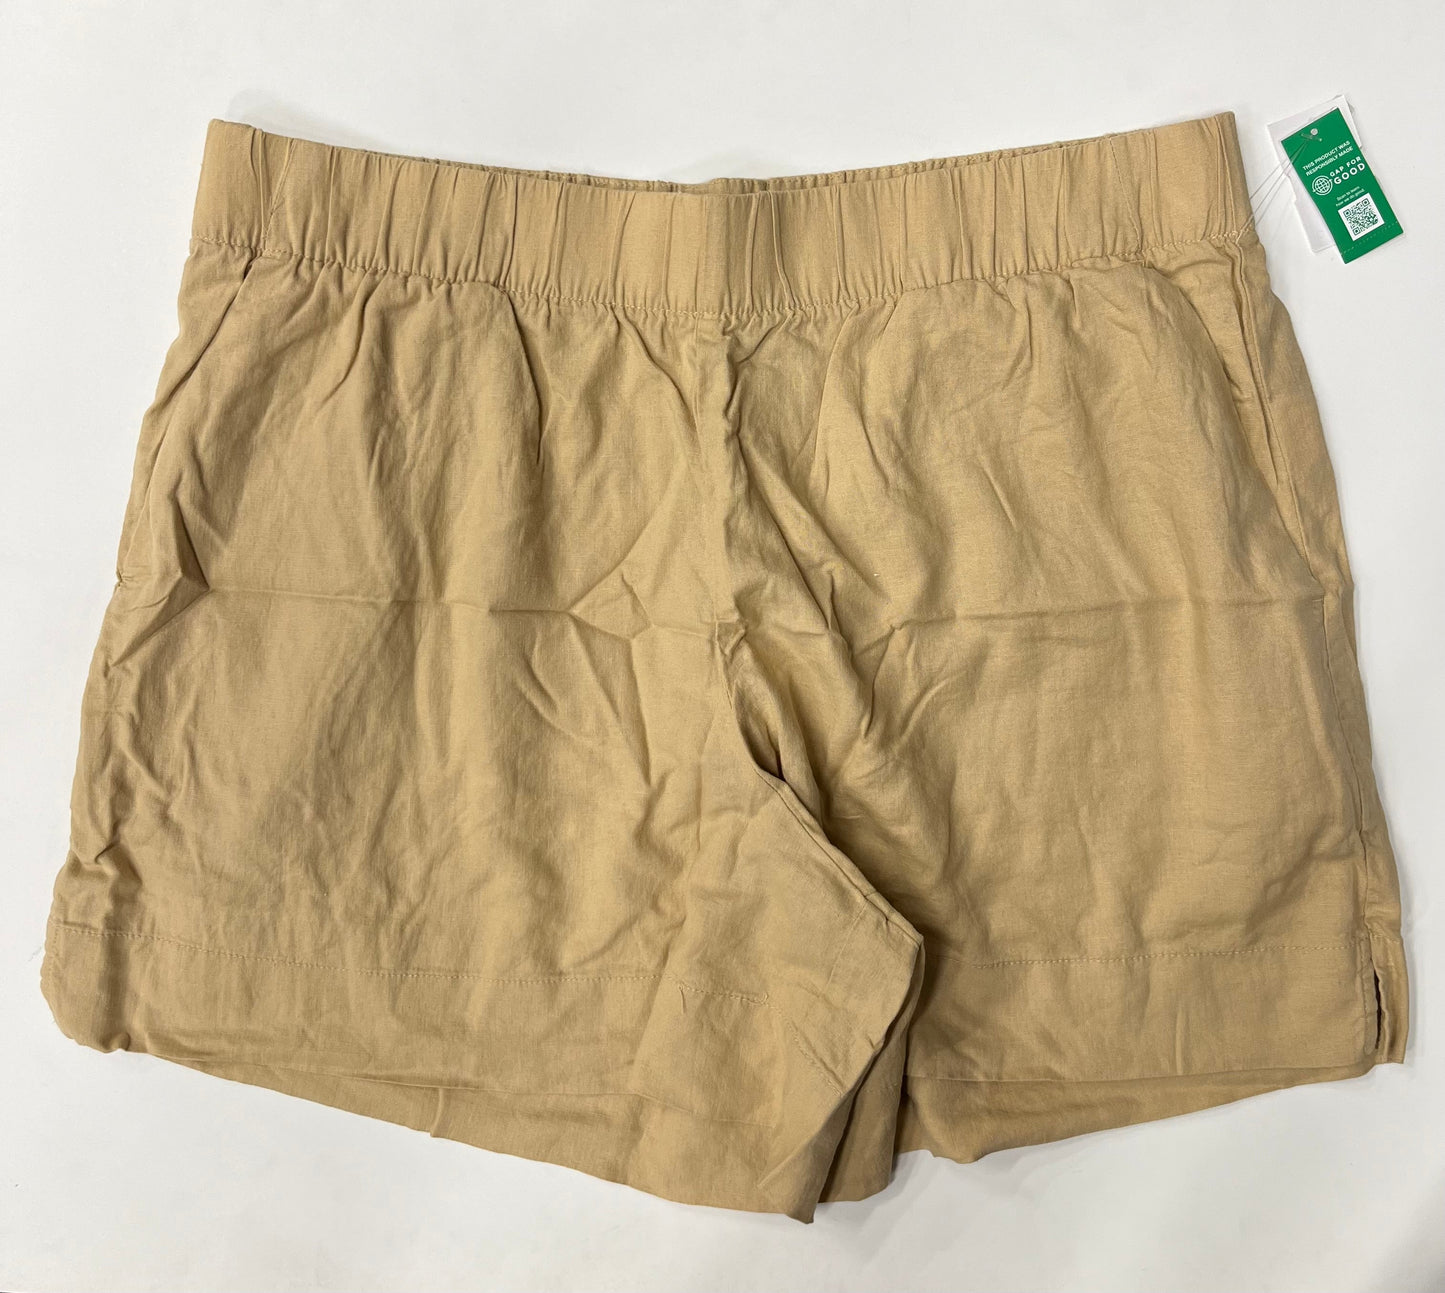 Shorts By Gap NWT Size: 16